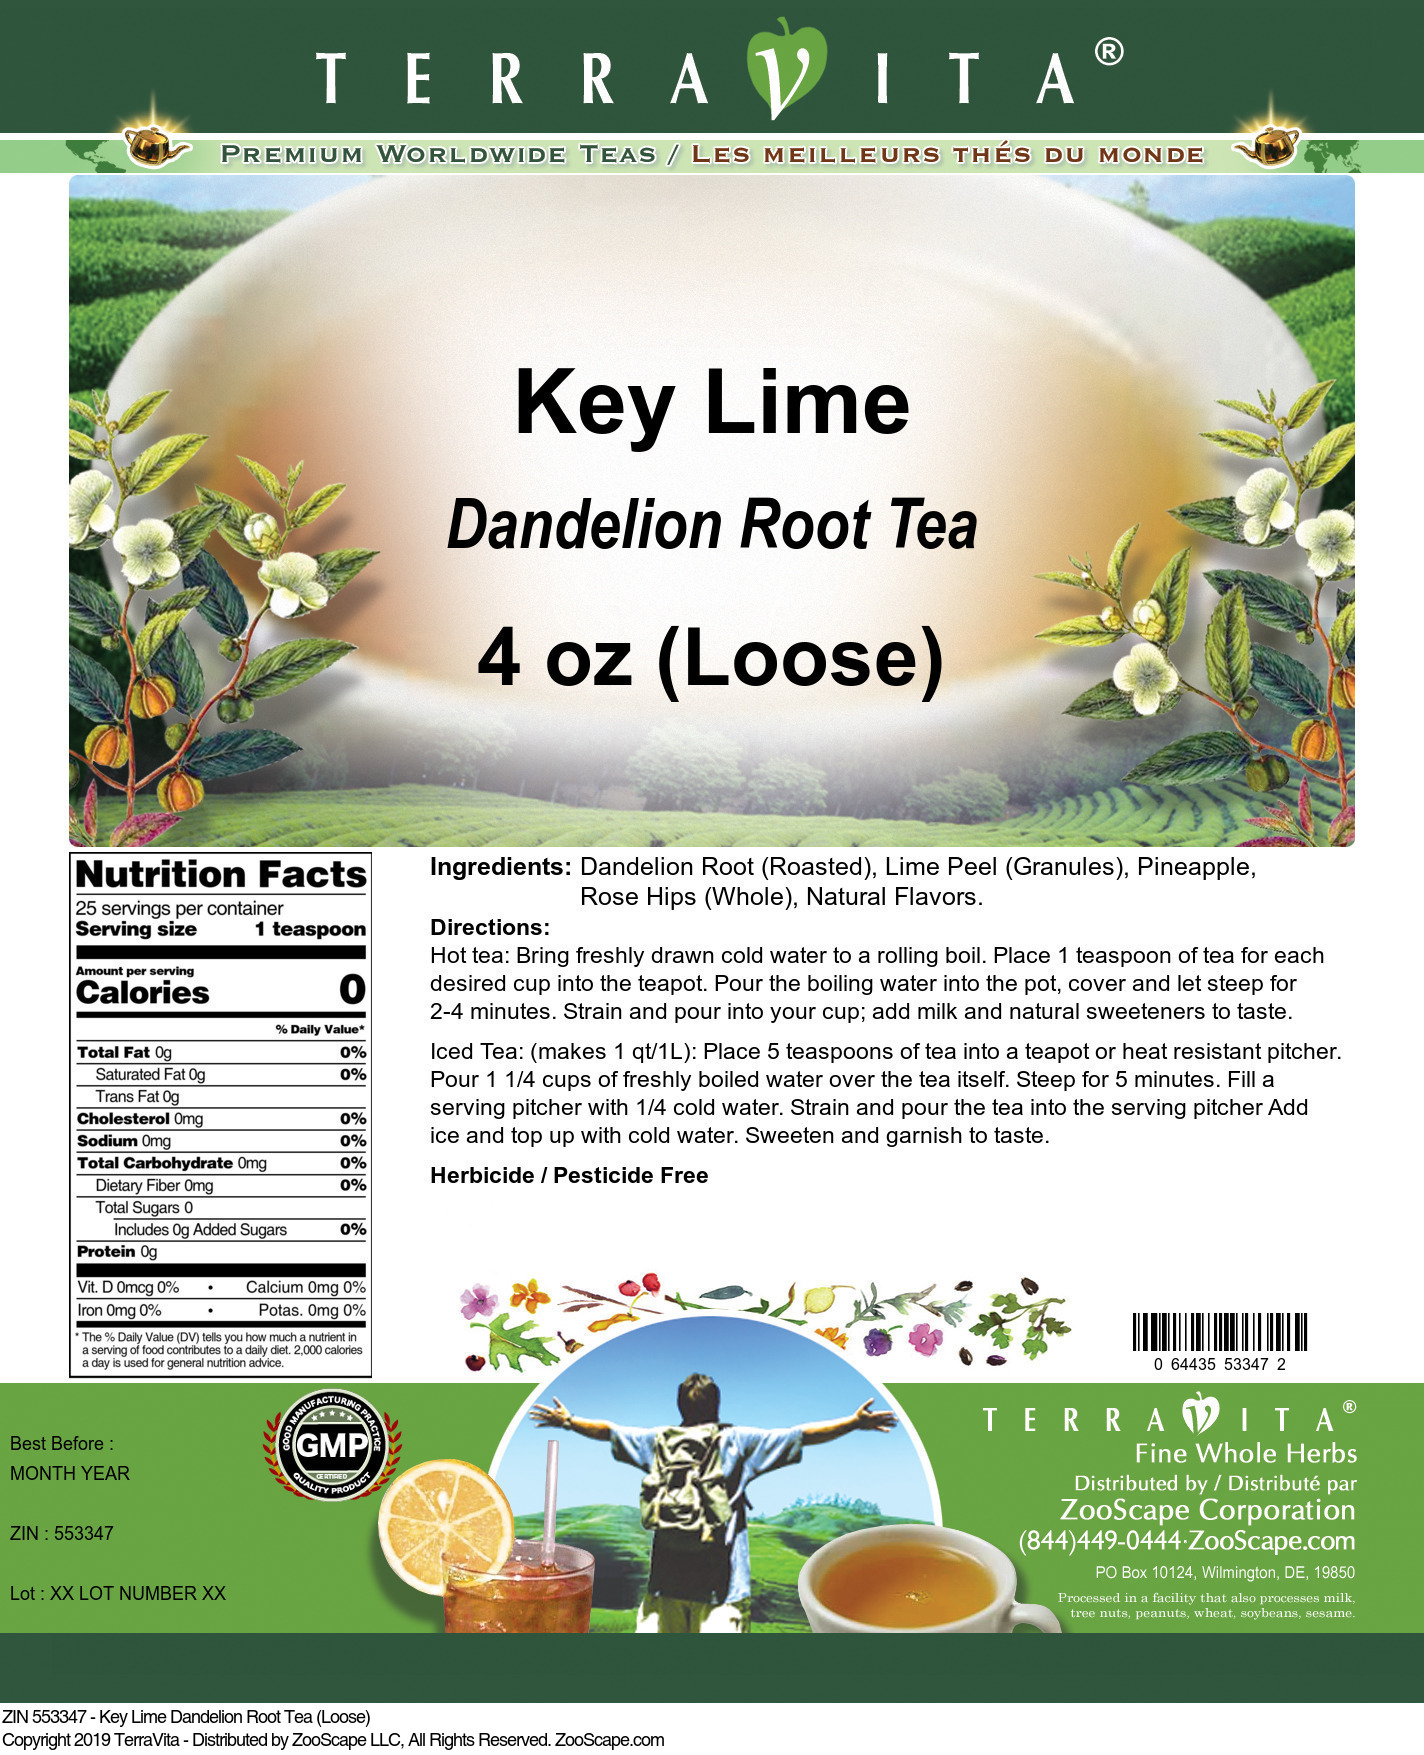 Key Lime Dandelion Root Tea (Loose) - Label